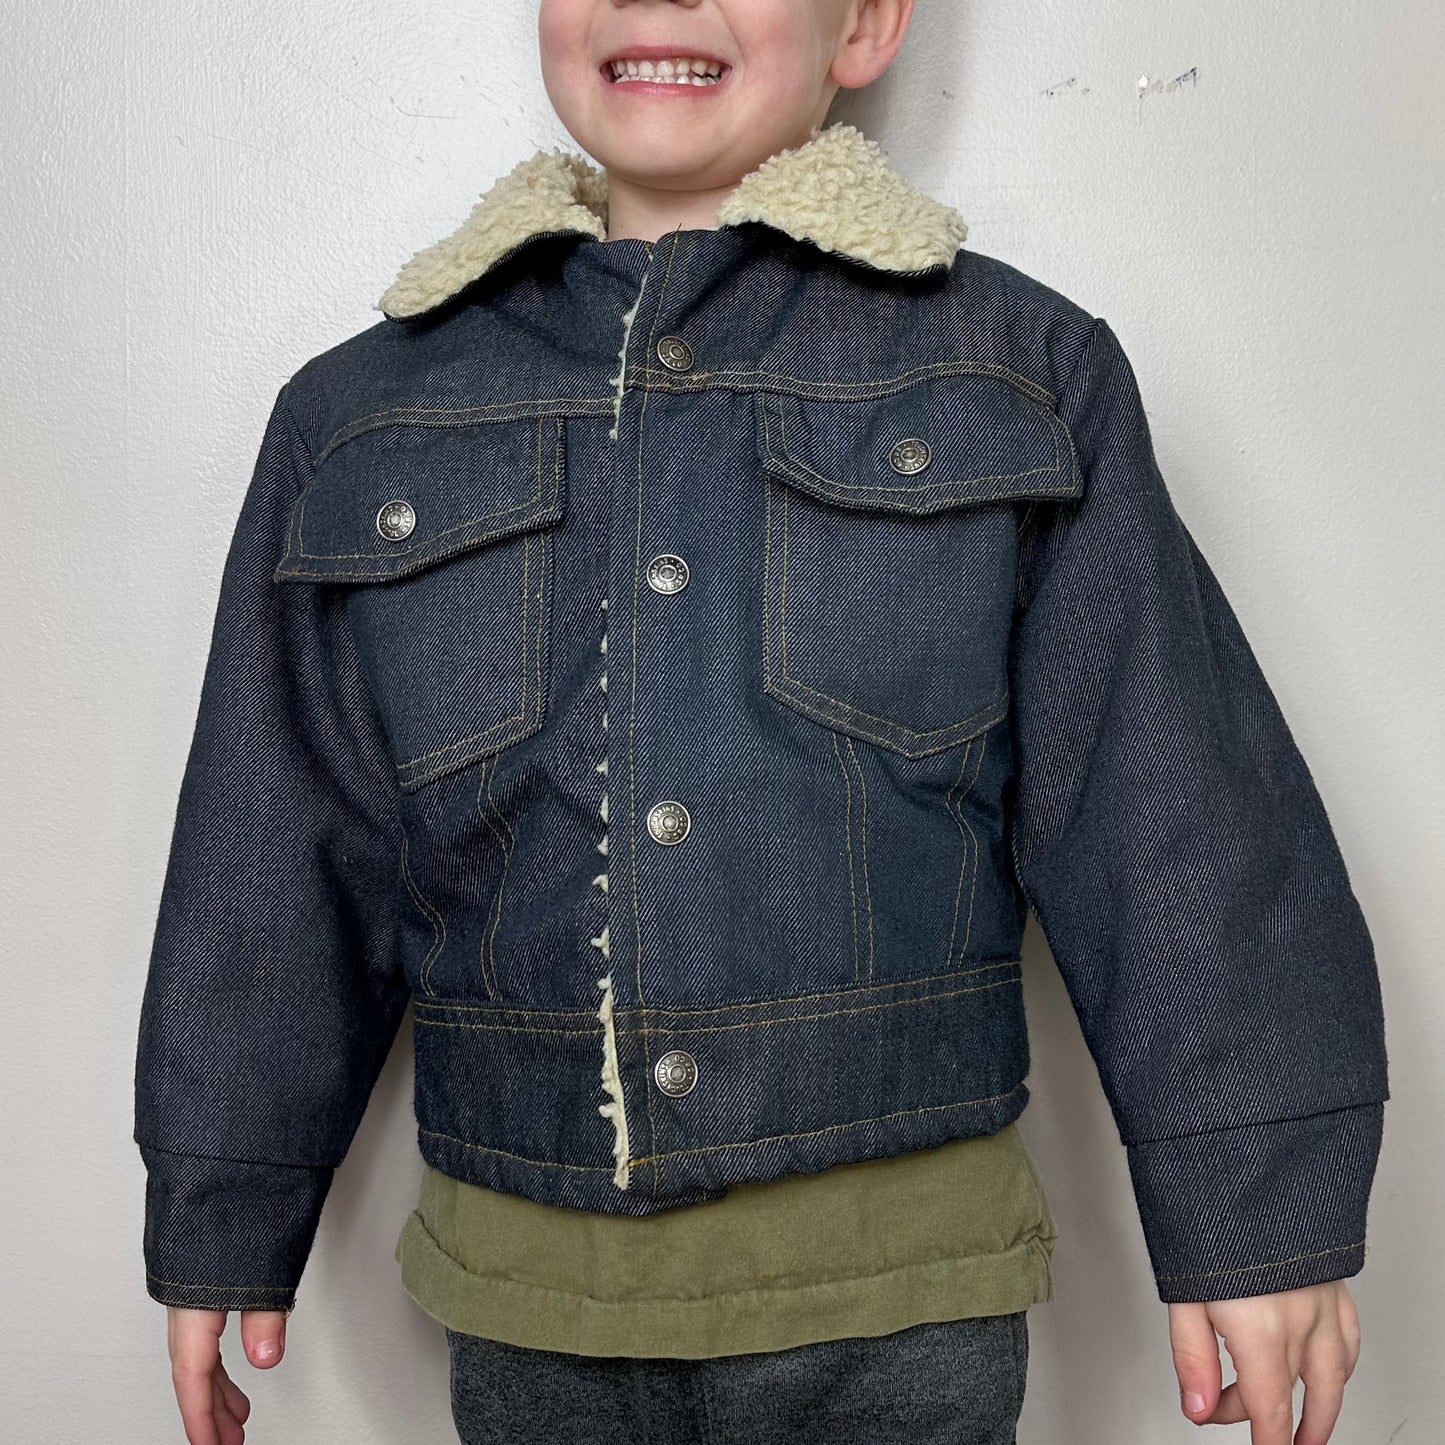 1970s Kids Sherpa Lined Denim Jacket, Sears Toughskins Size 6/7